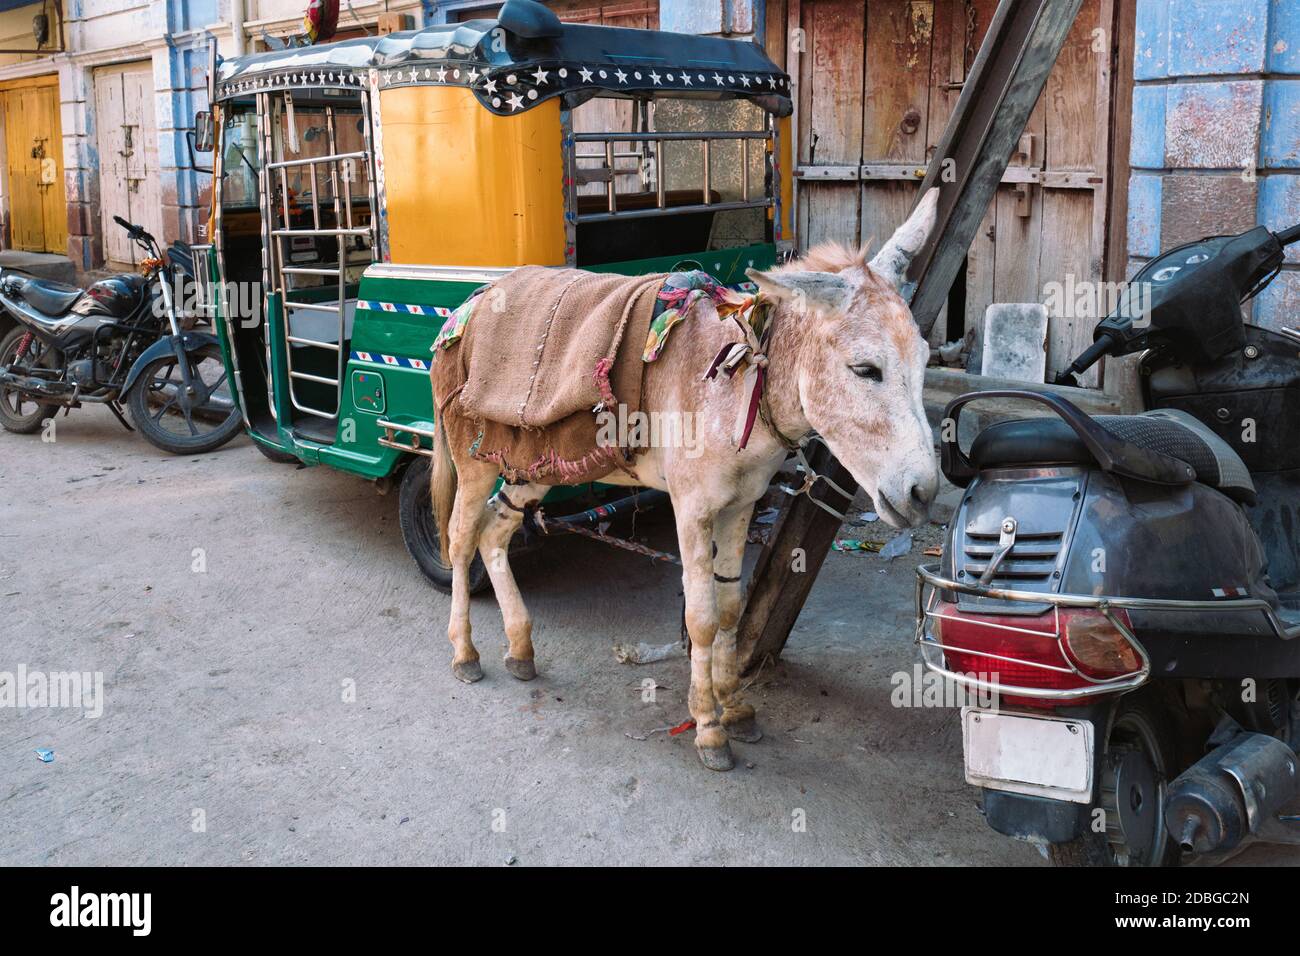 Trasporti dell'India - asino, rickshaw auto e motocicli in via indiana. Jodhpur, Rajastha, India Foto Stock